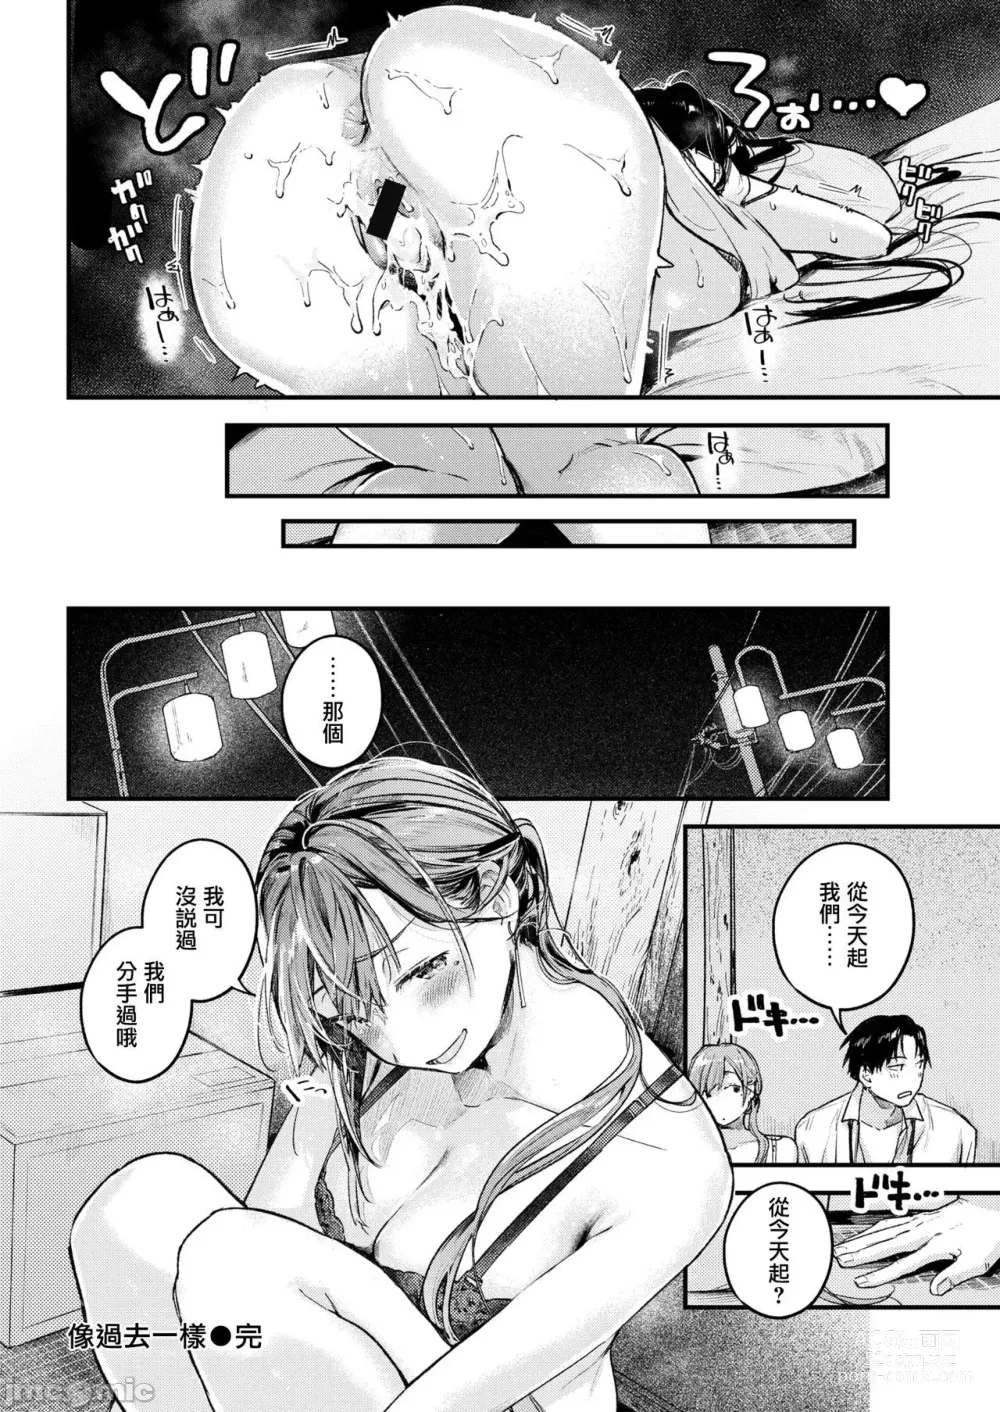 Page 22 of manga 像過去一樣